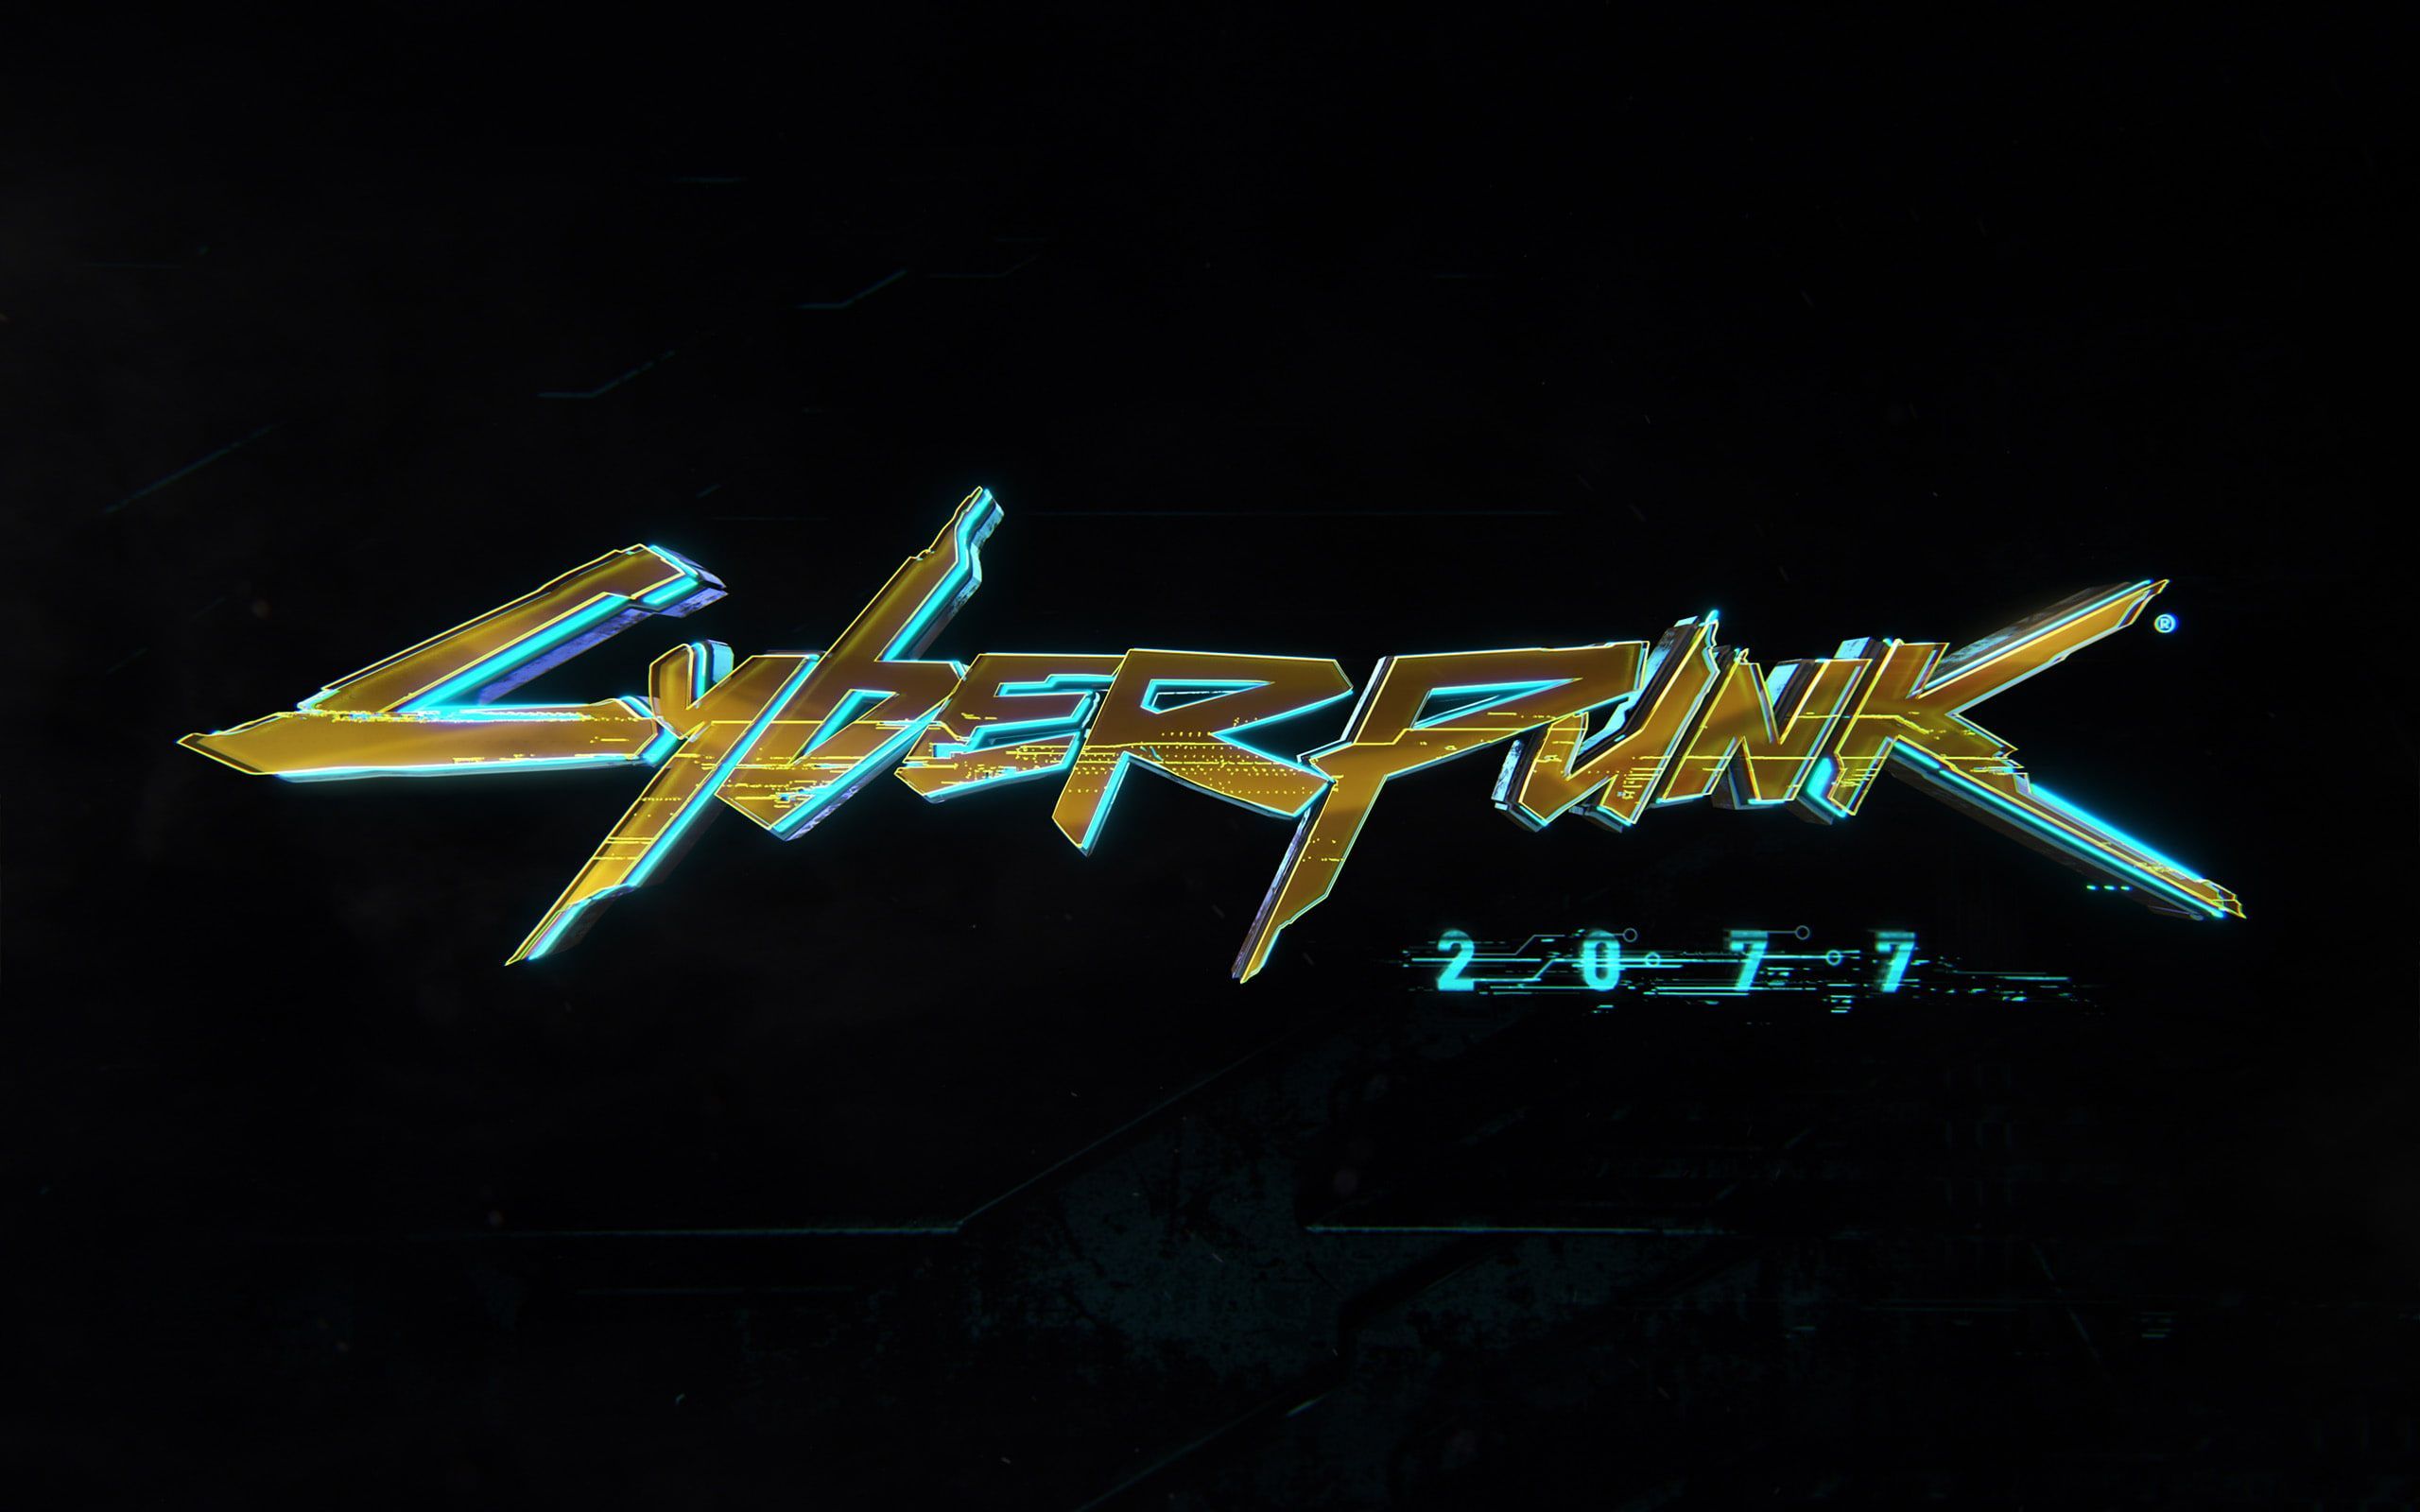 Cyberpunk 2077 video games simple background black background K #wallpaper #hdwallpaper #desktop. Cyberpunk Cyberpunk, Simple background